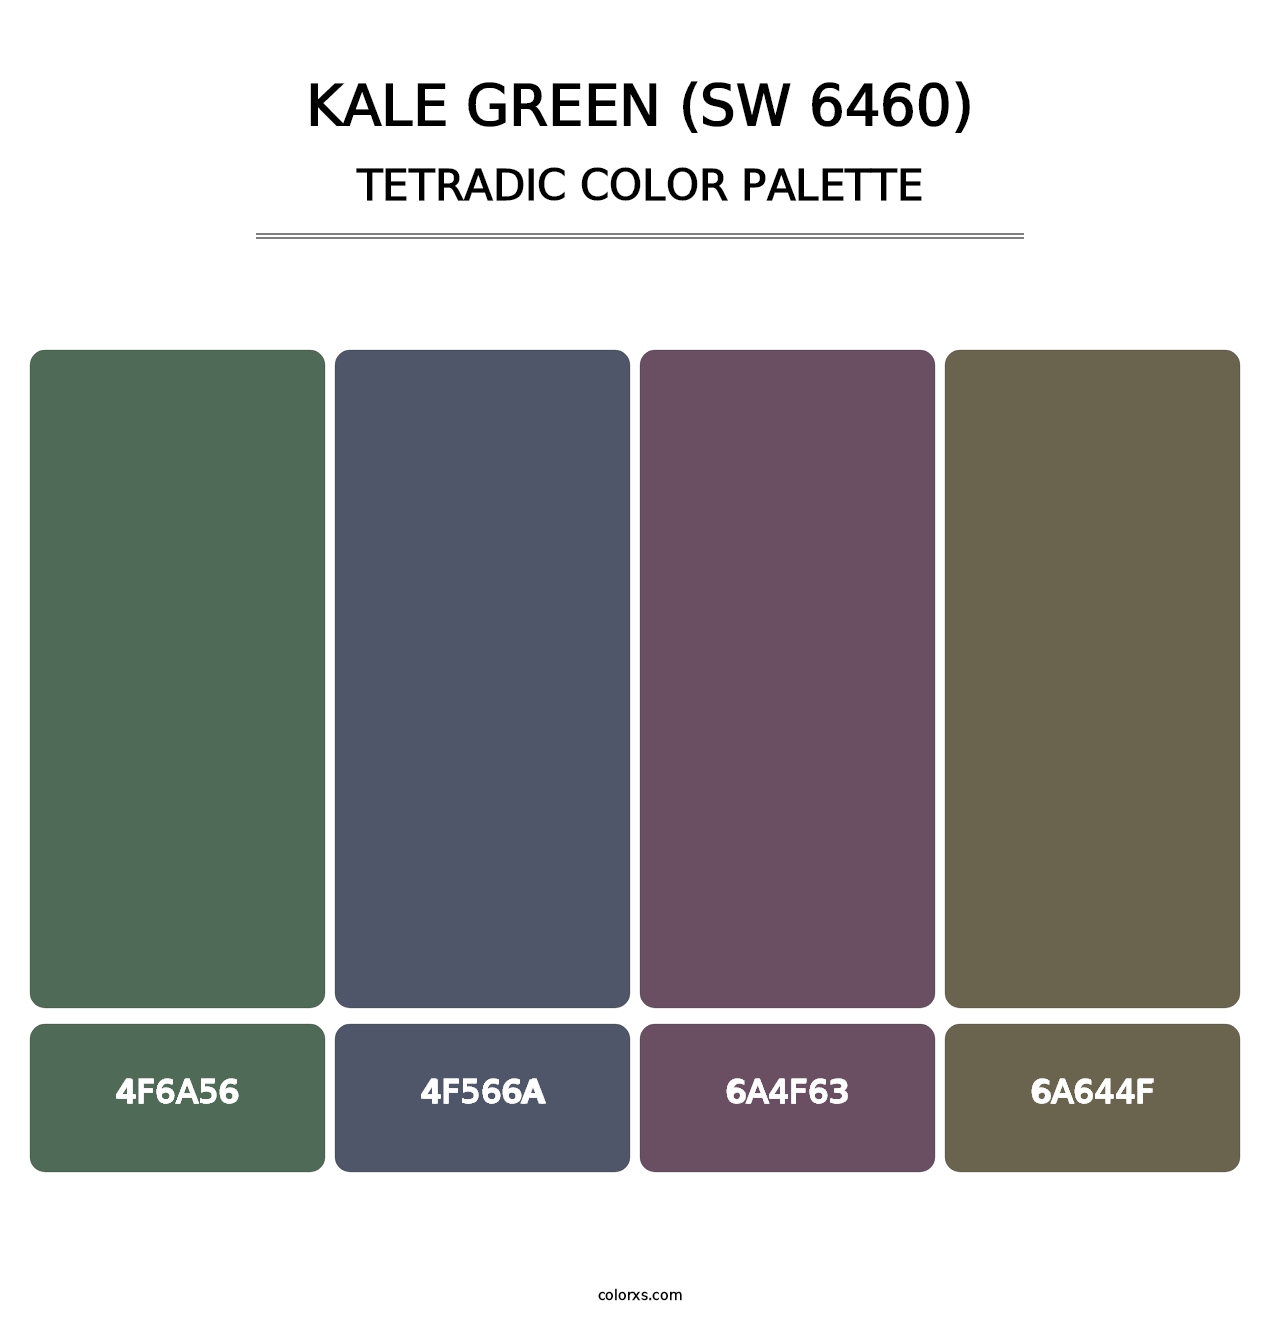 Kale Green (SW 6460) - Tetradic Color Palette